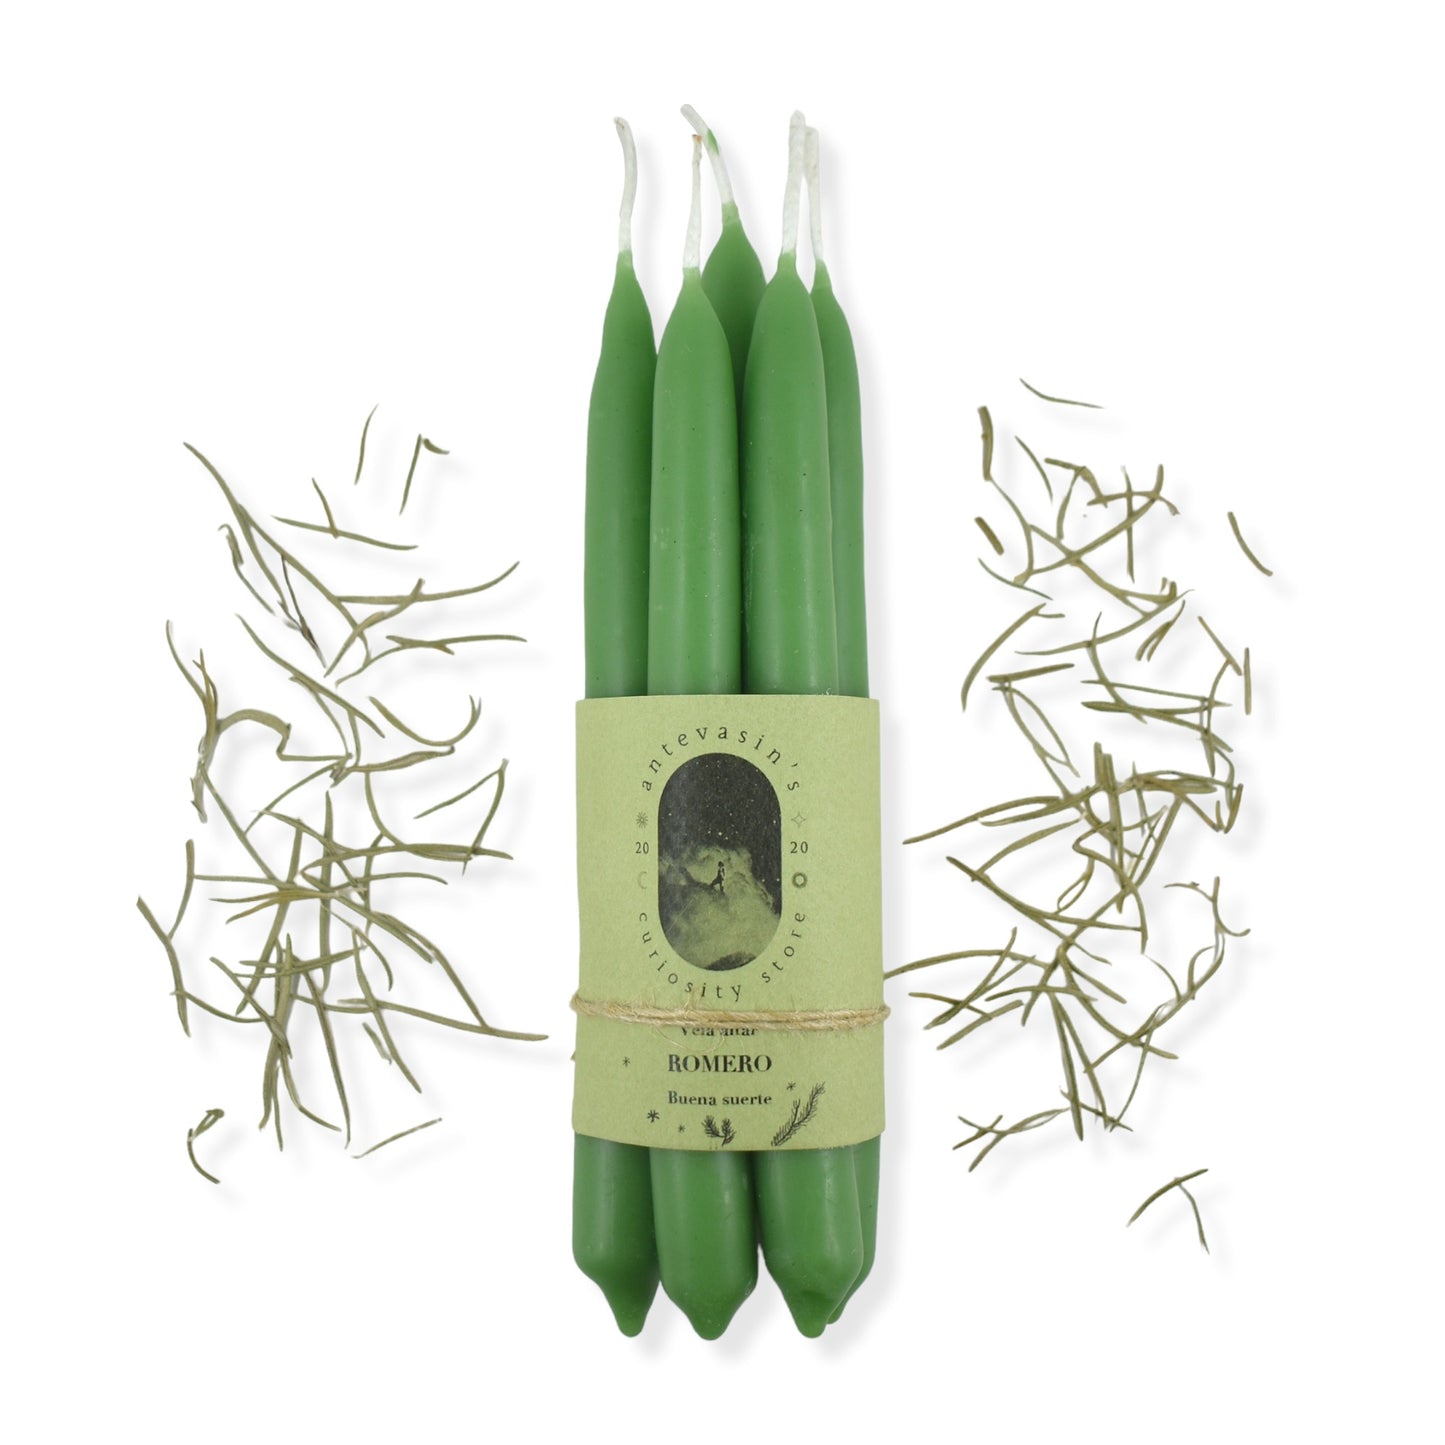 Vela ritual verde ROMERO (Salud y Buena suerte)  15gr x 13cm